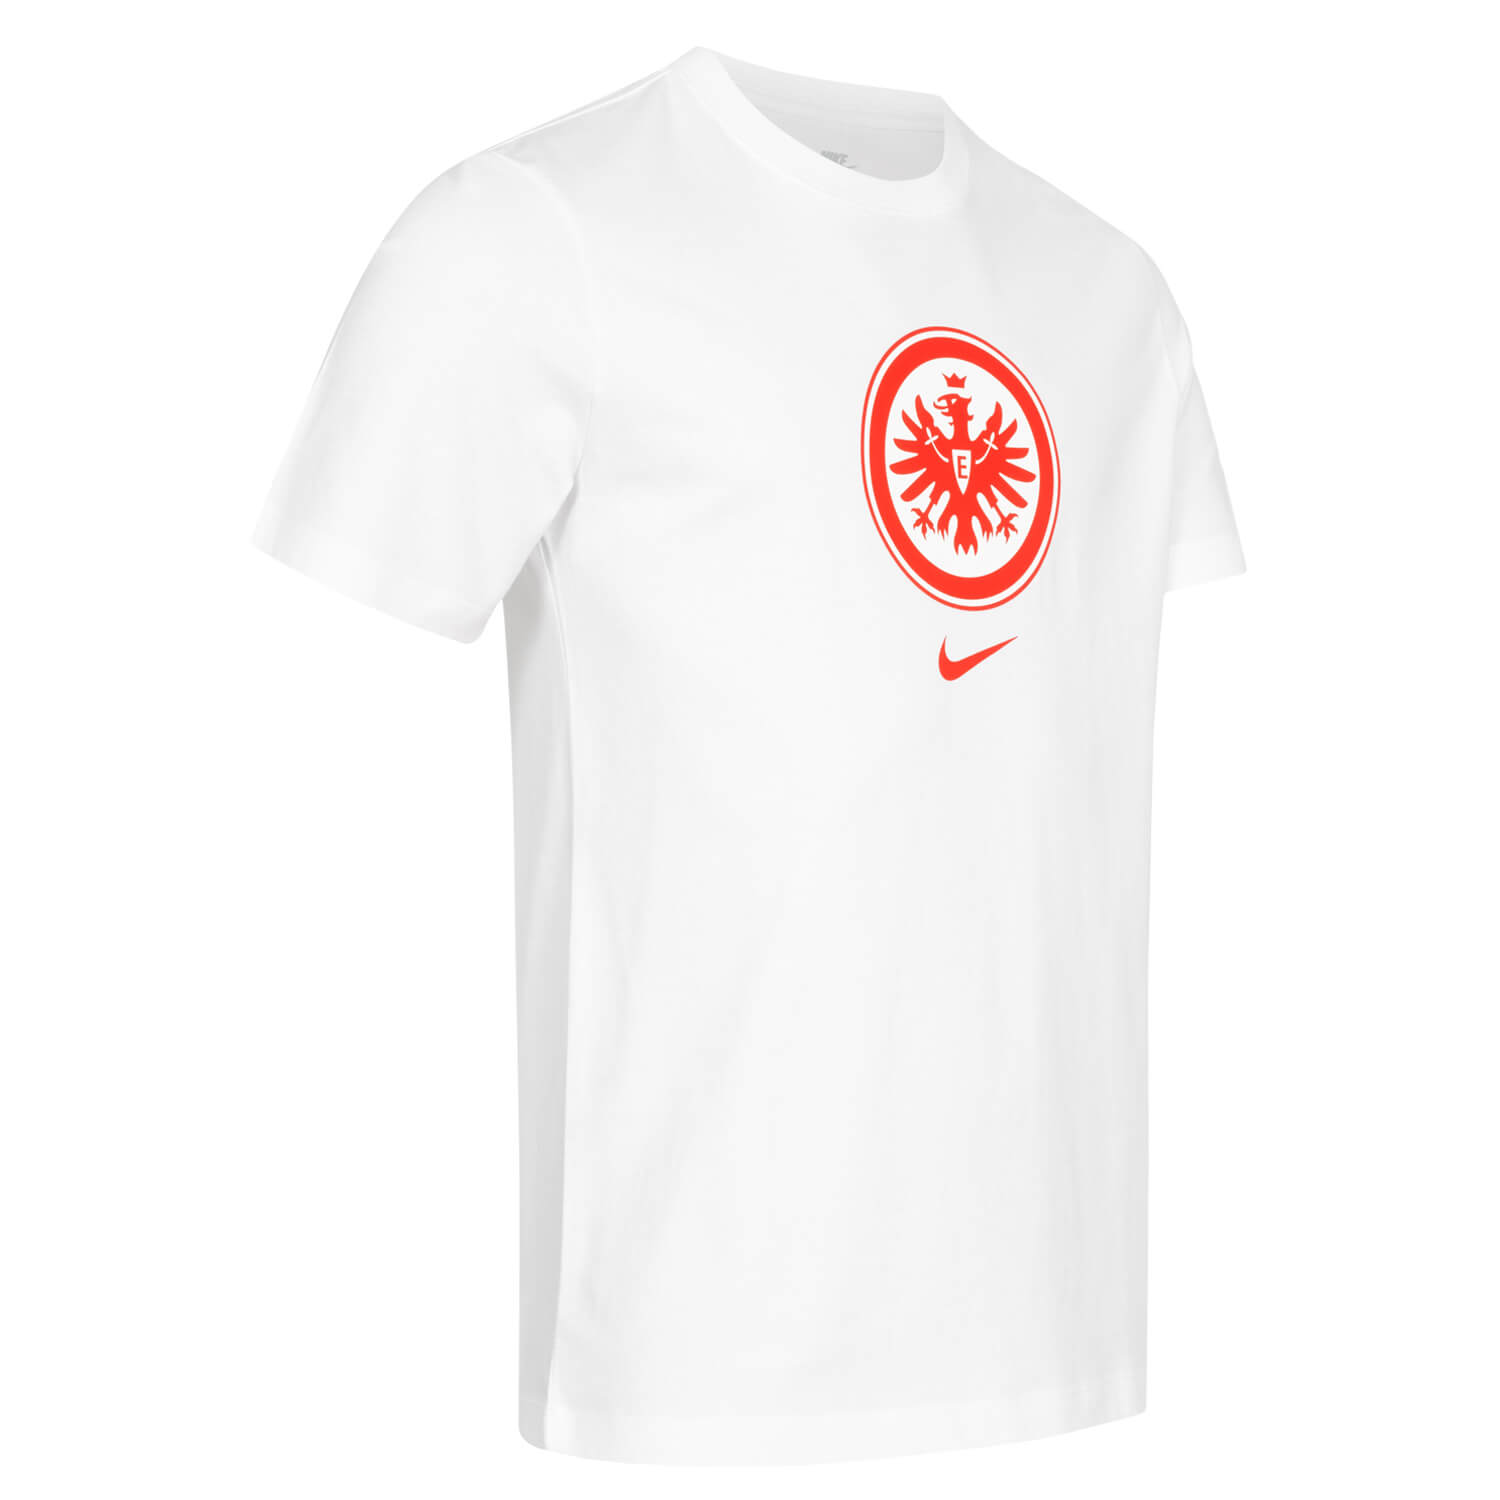 Bild 4: Nike T-Shirt 23 Weiß